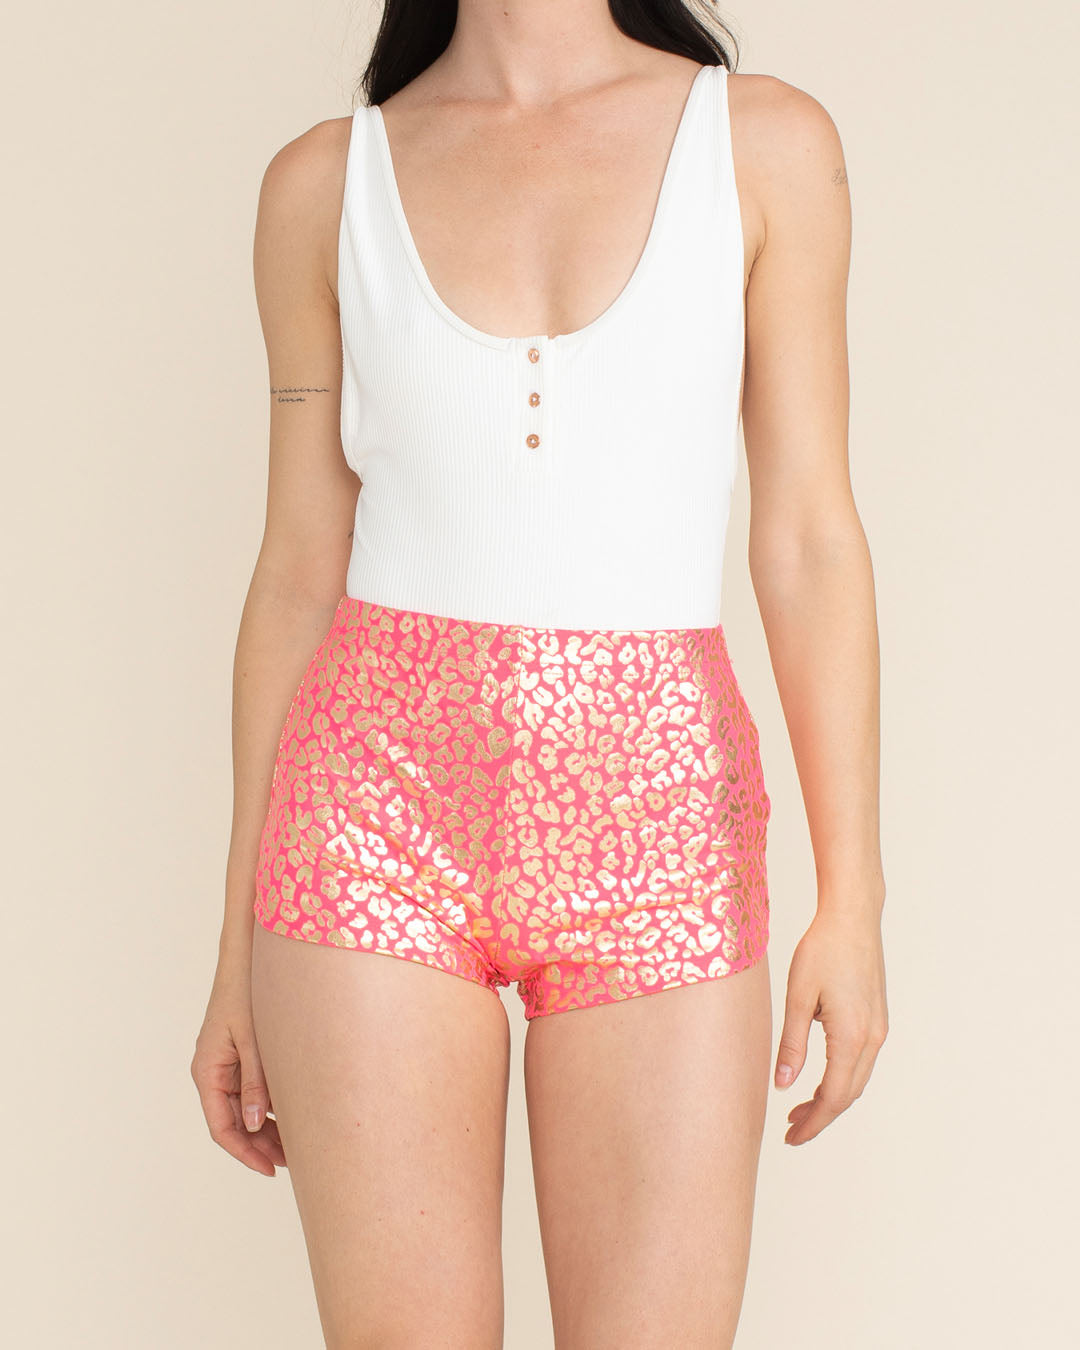 Neon Pink Royal Leopard Foil Booty Shorts | Women's